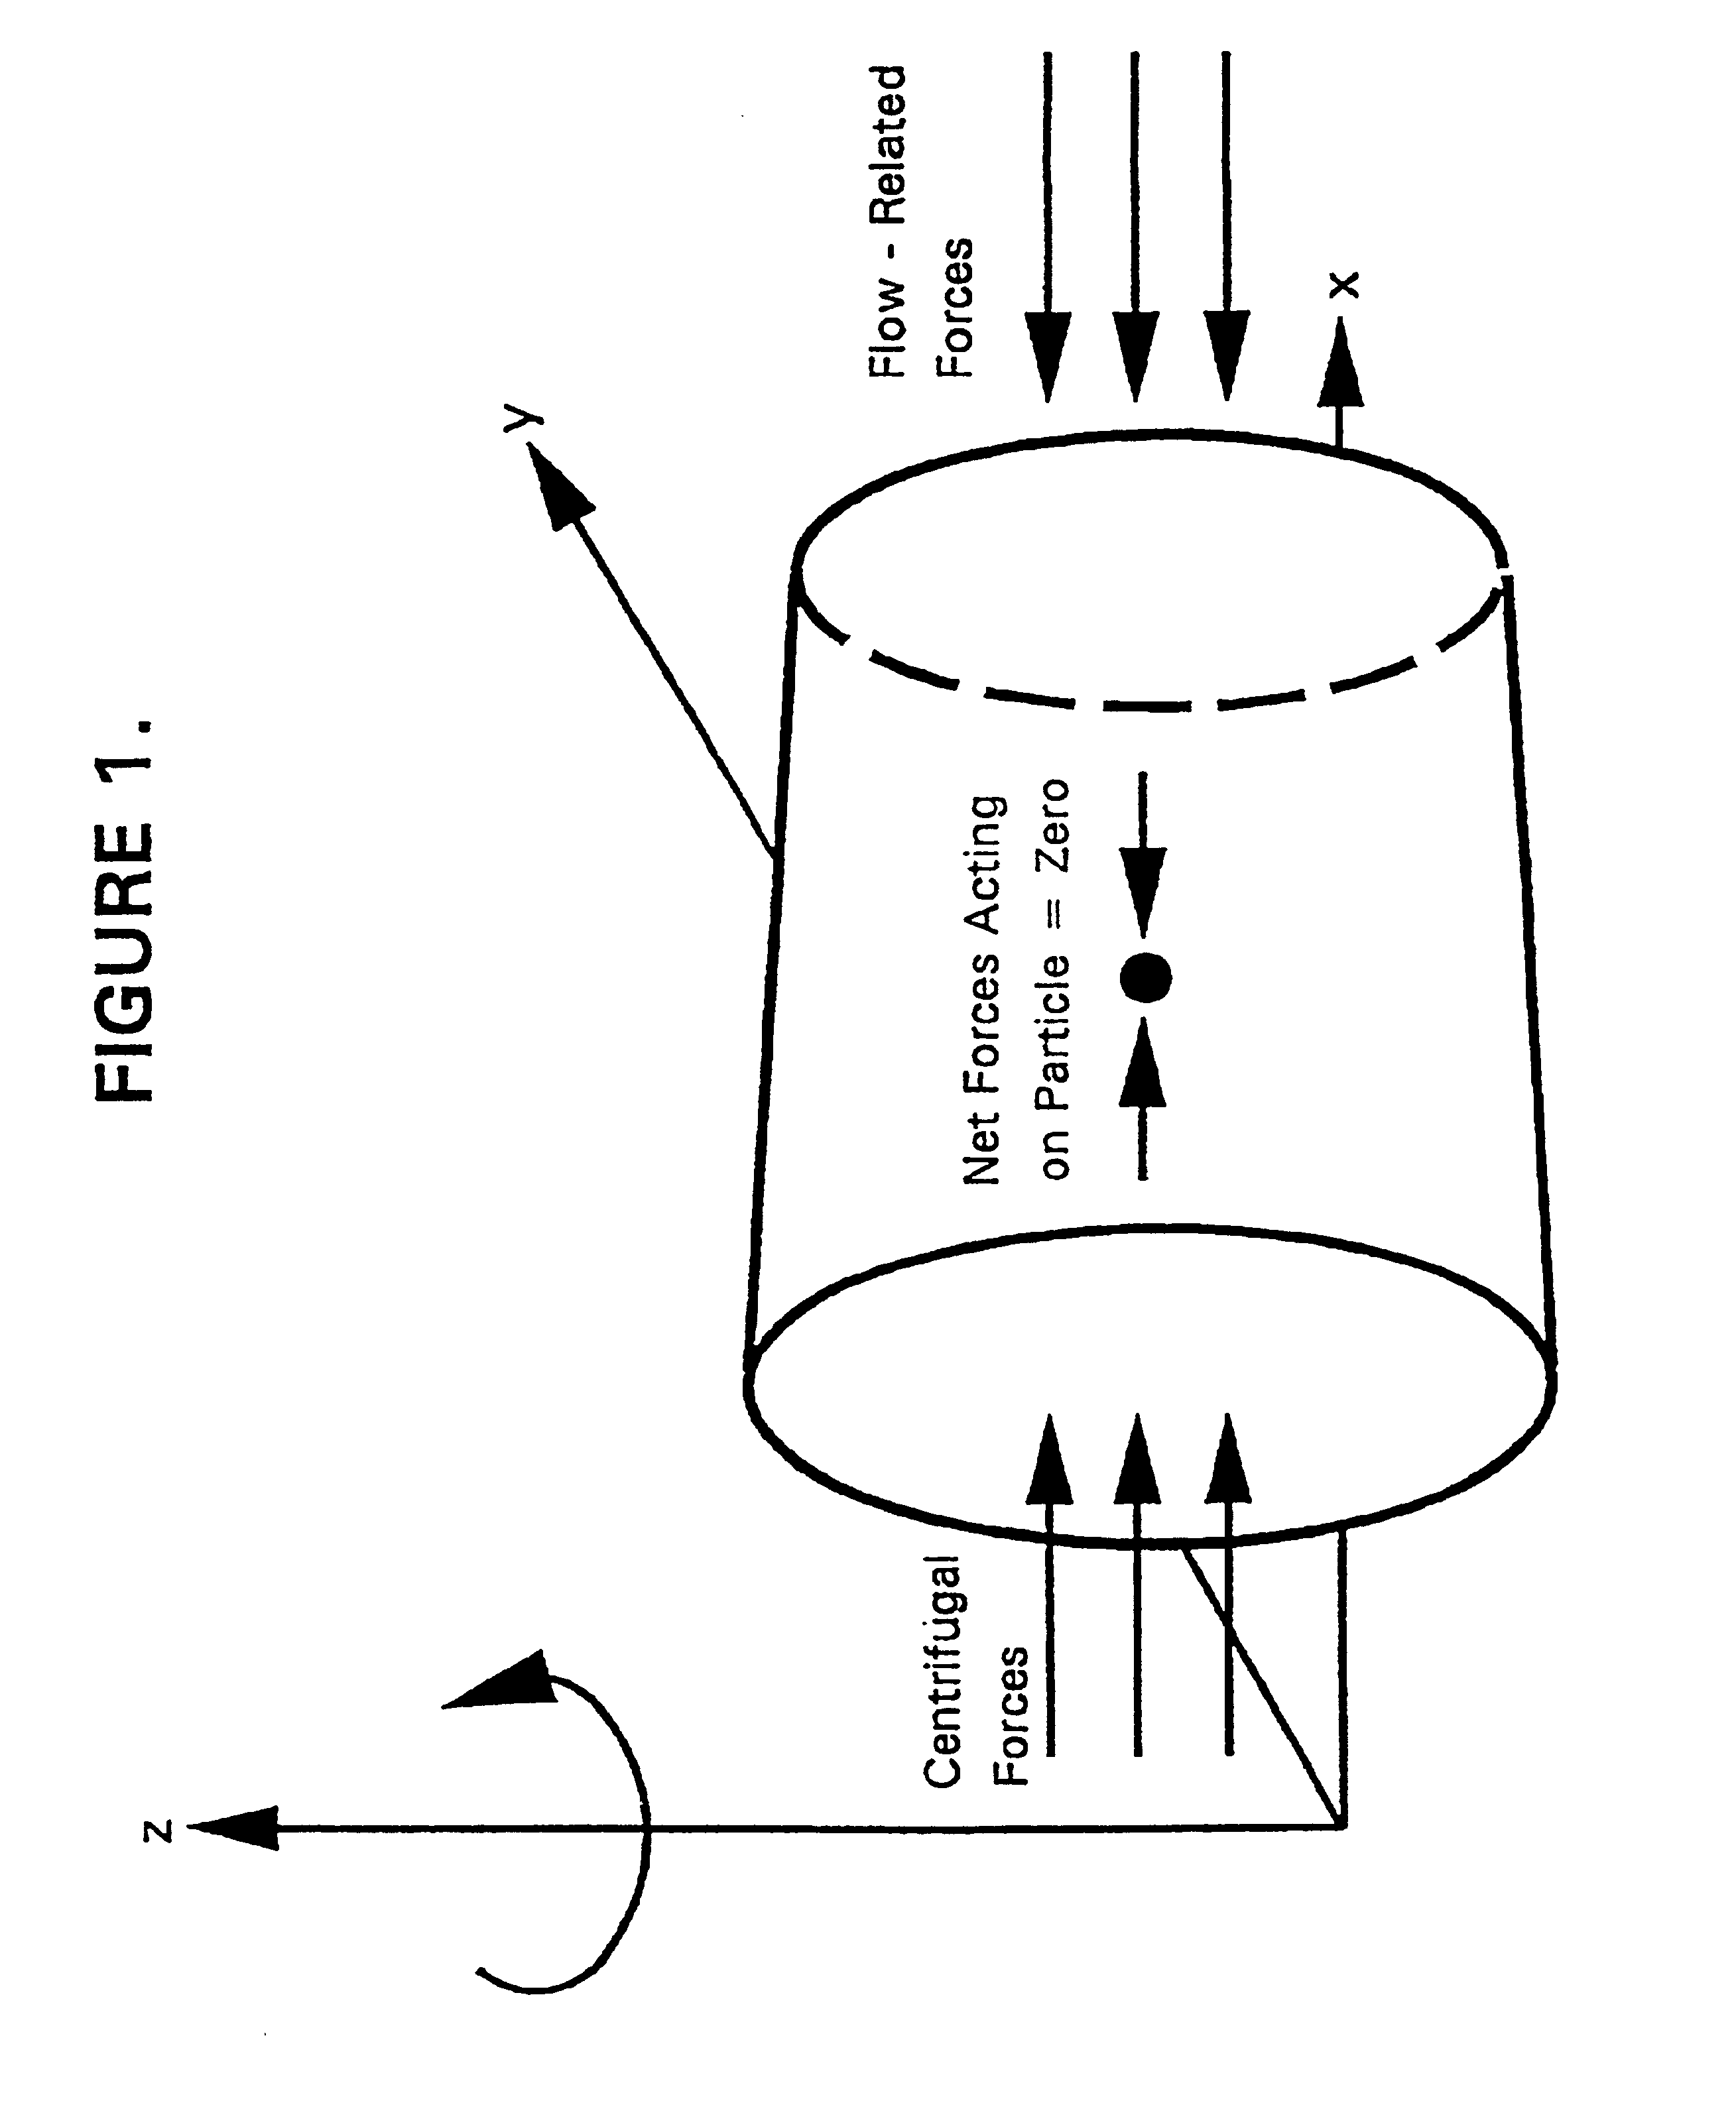 Biocatalyst chamber encapsulation system for bioremediation and fermentation